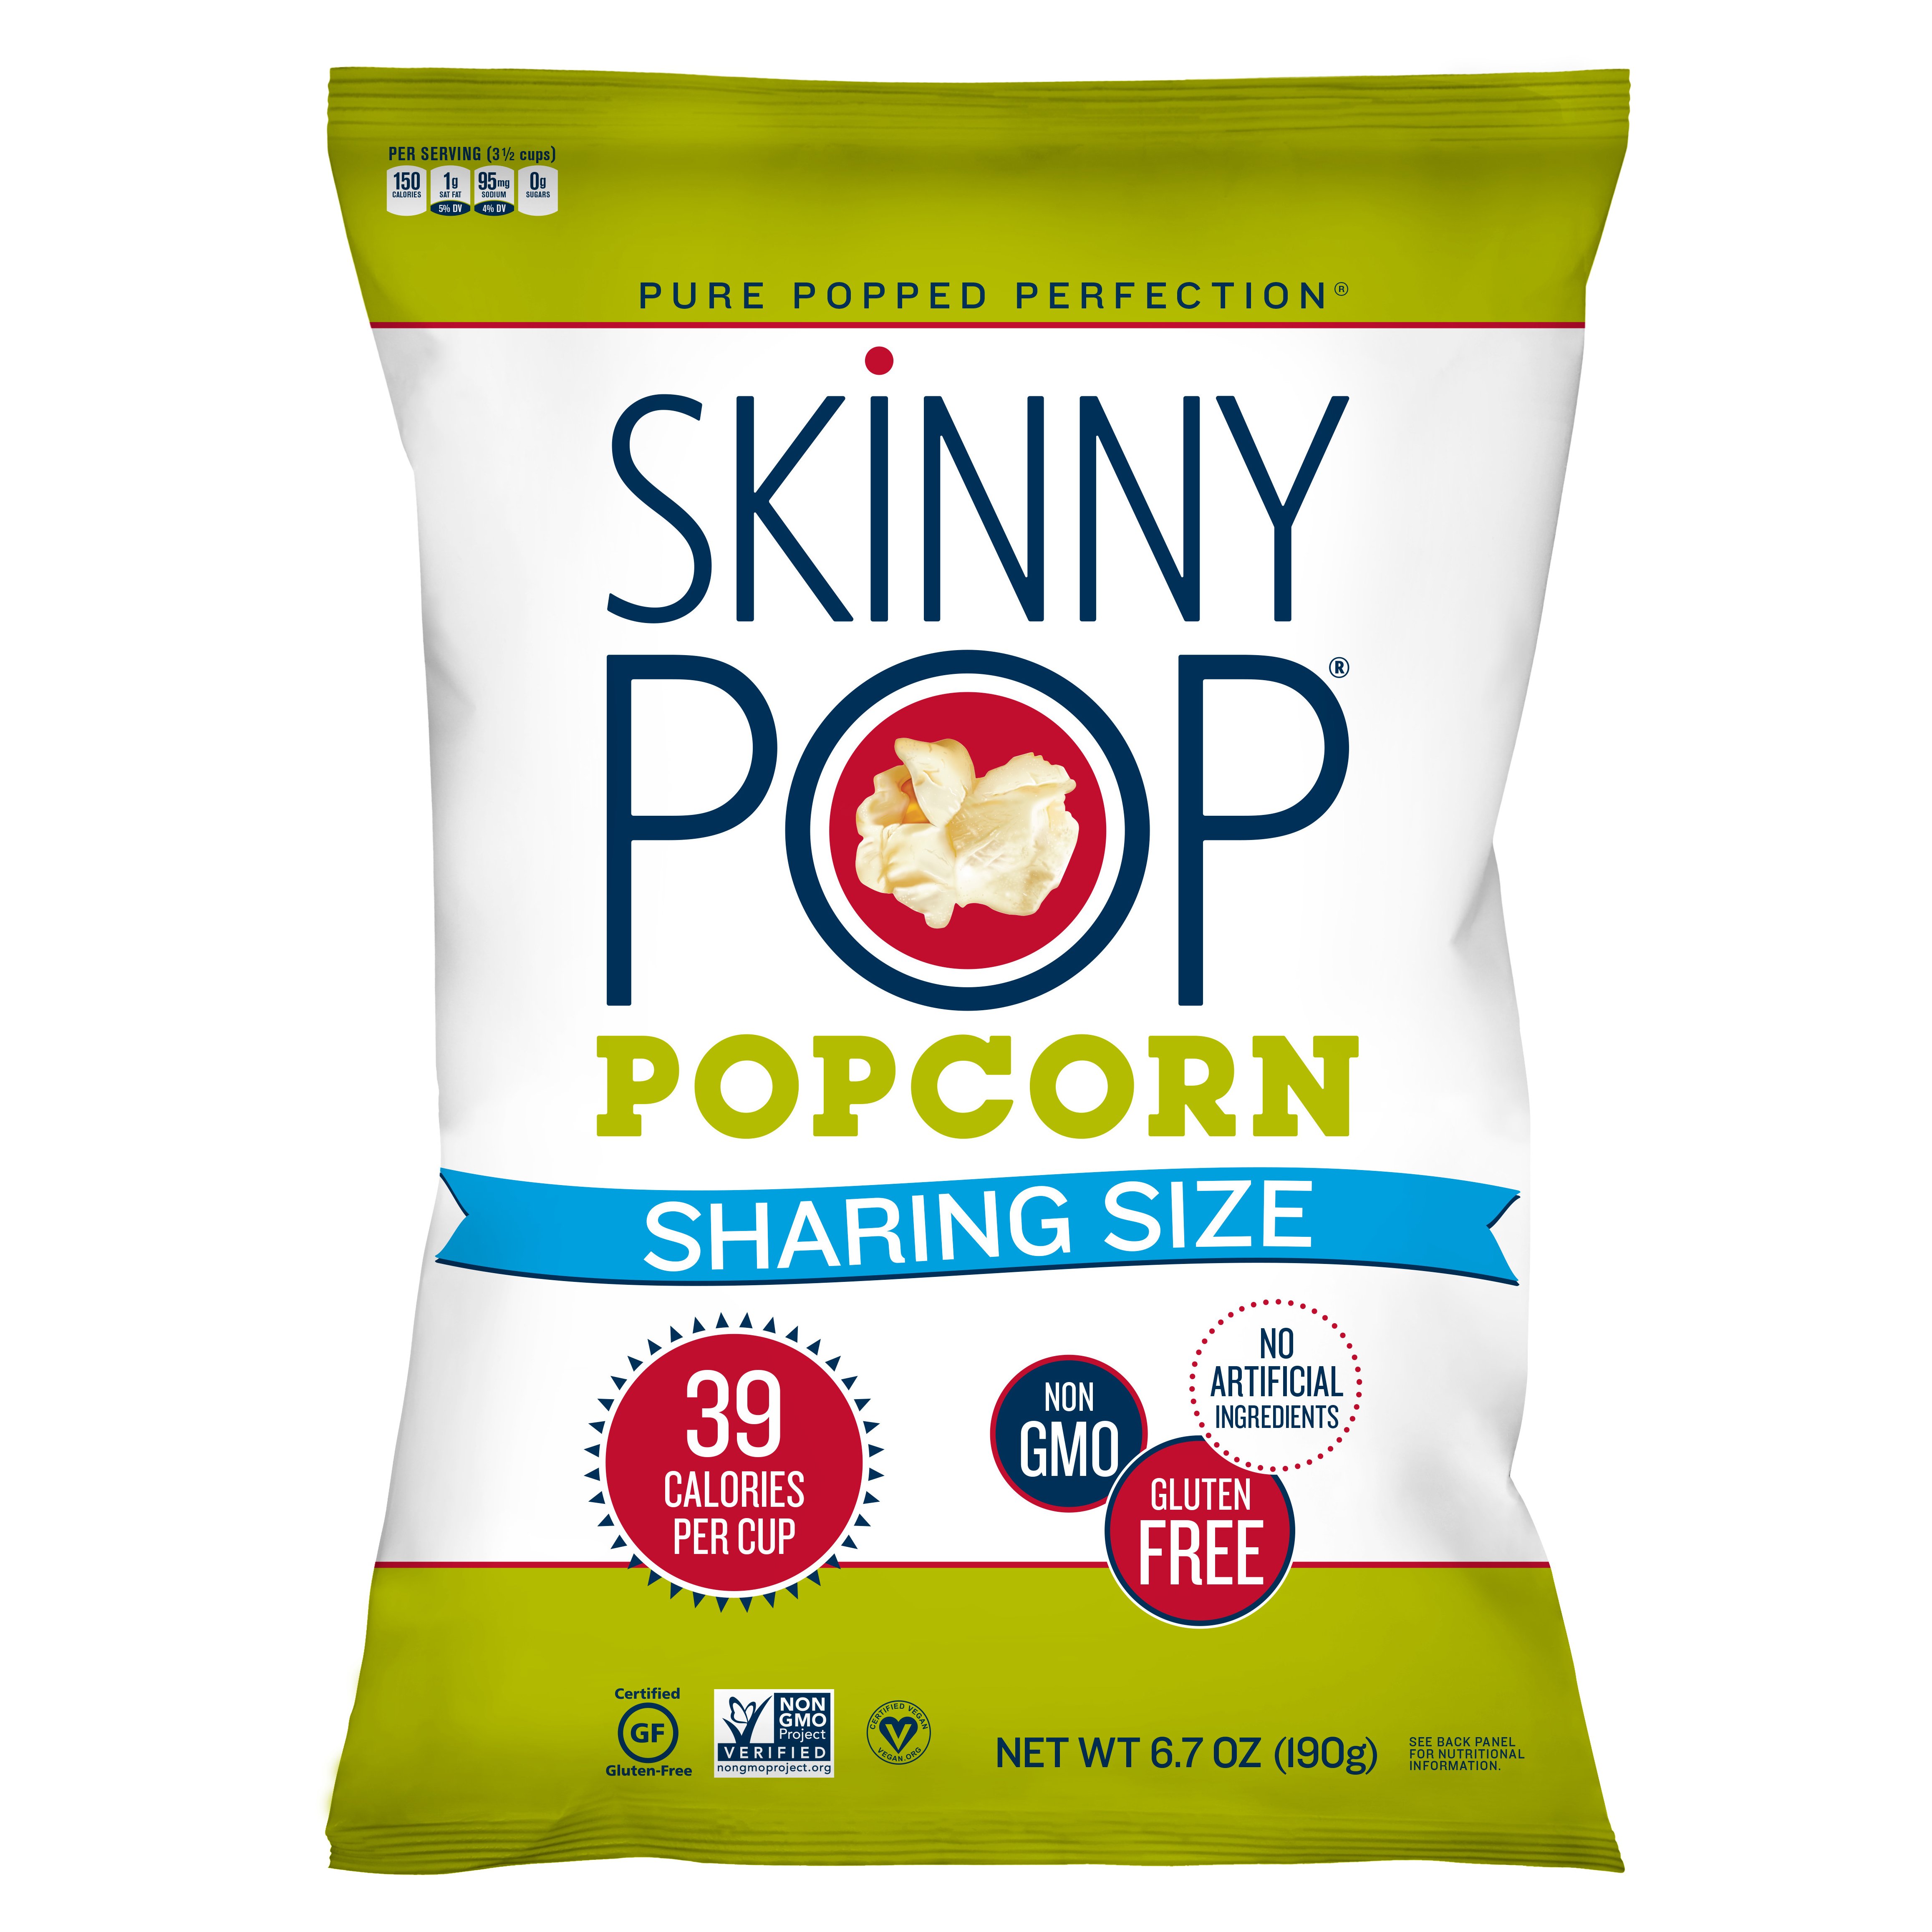 SkinnyPop Original Popcorn Sharing Size